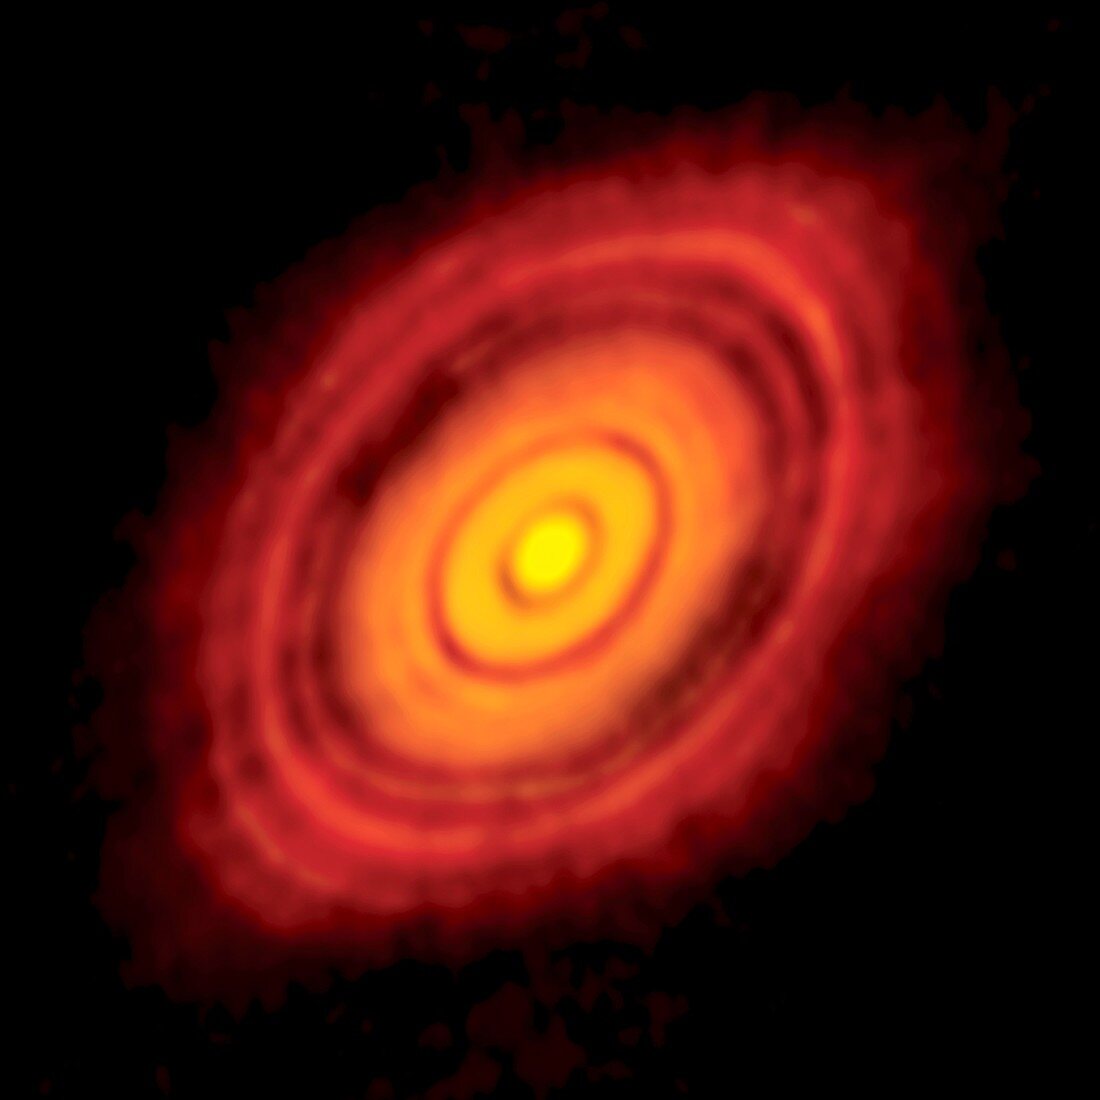 HL Tauri protoplanetary disk,ALMA image